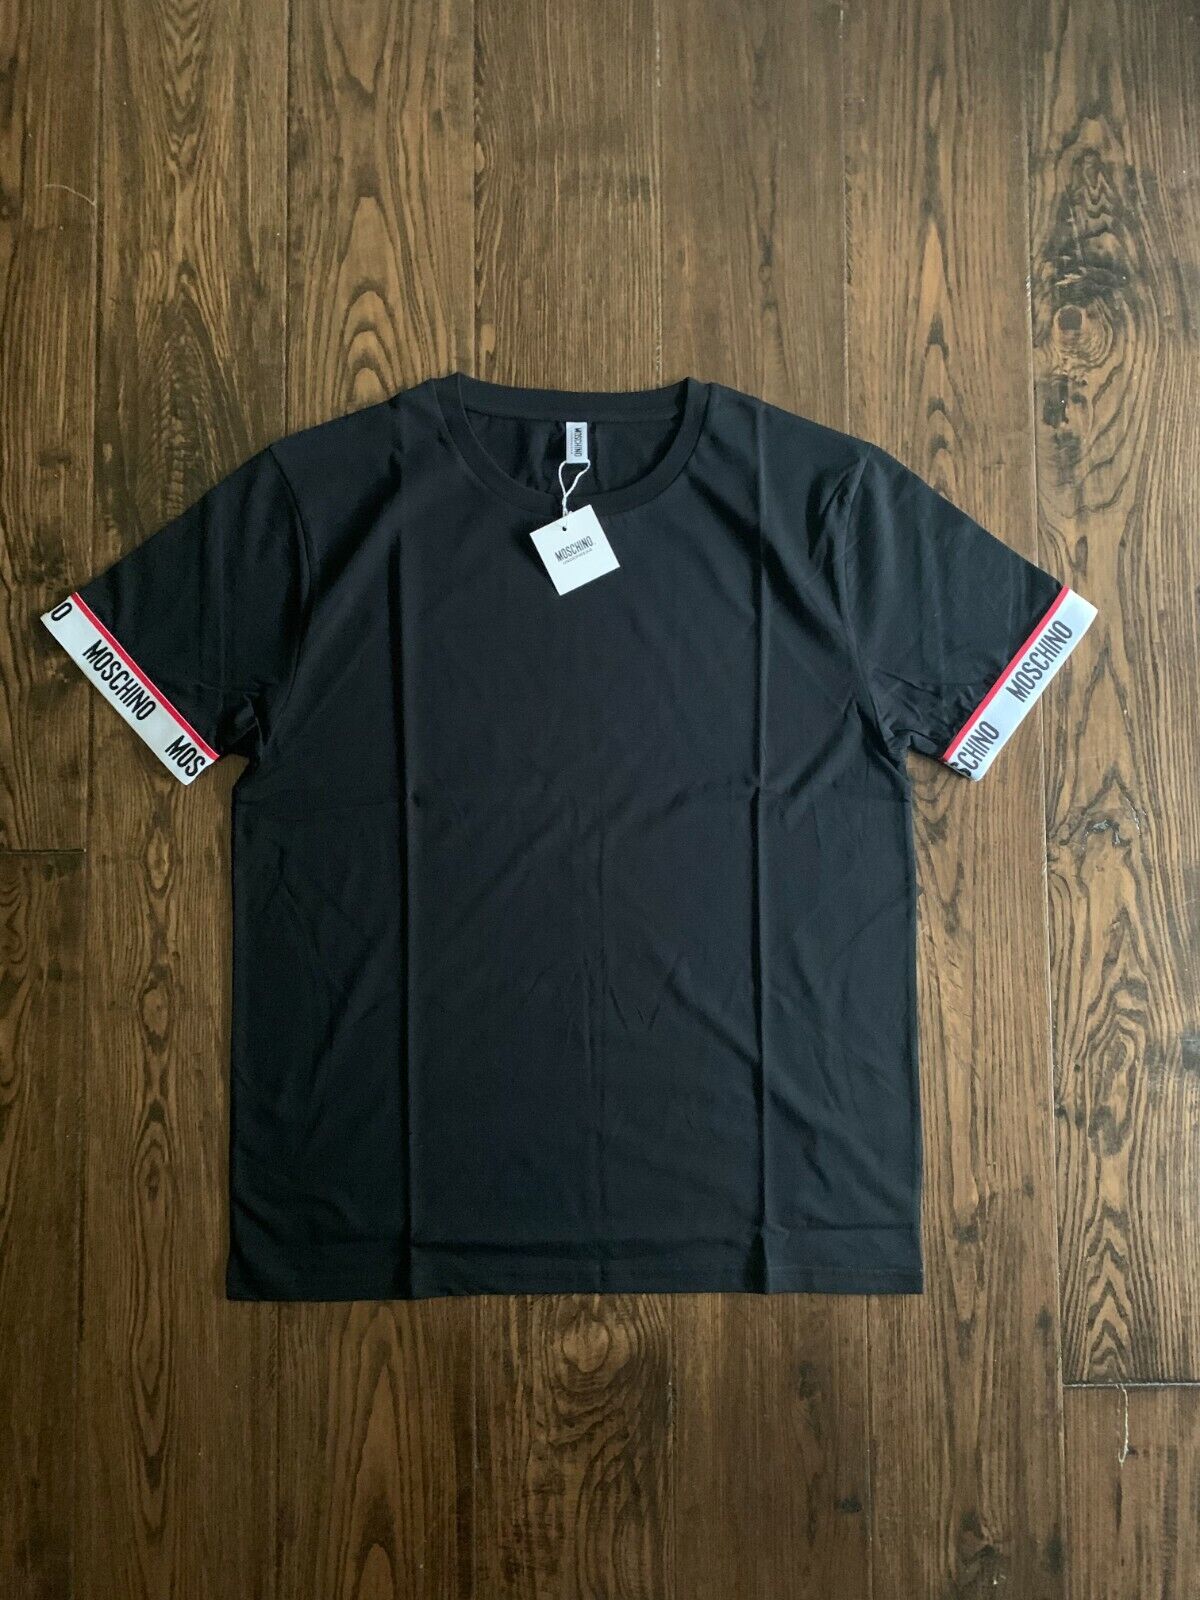 Moschino Sleeve Tape Logo Black T-Shirt EU XXL (DUSTBAG INCLUDED)